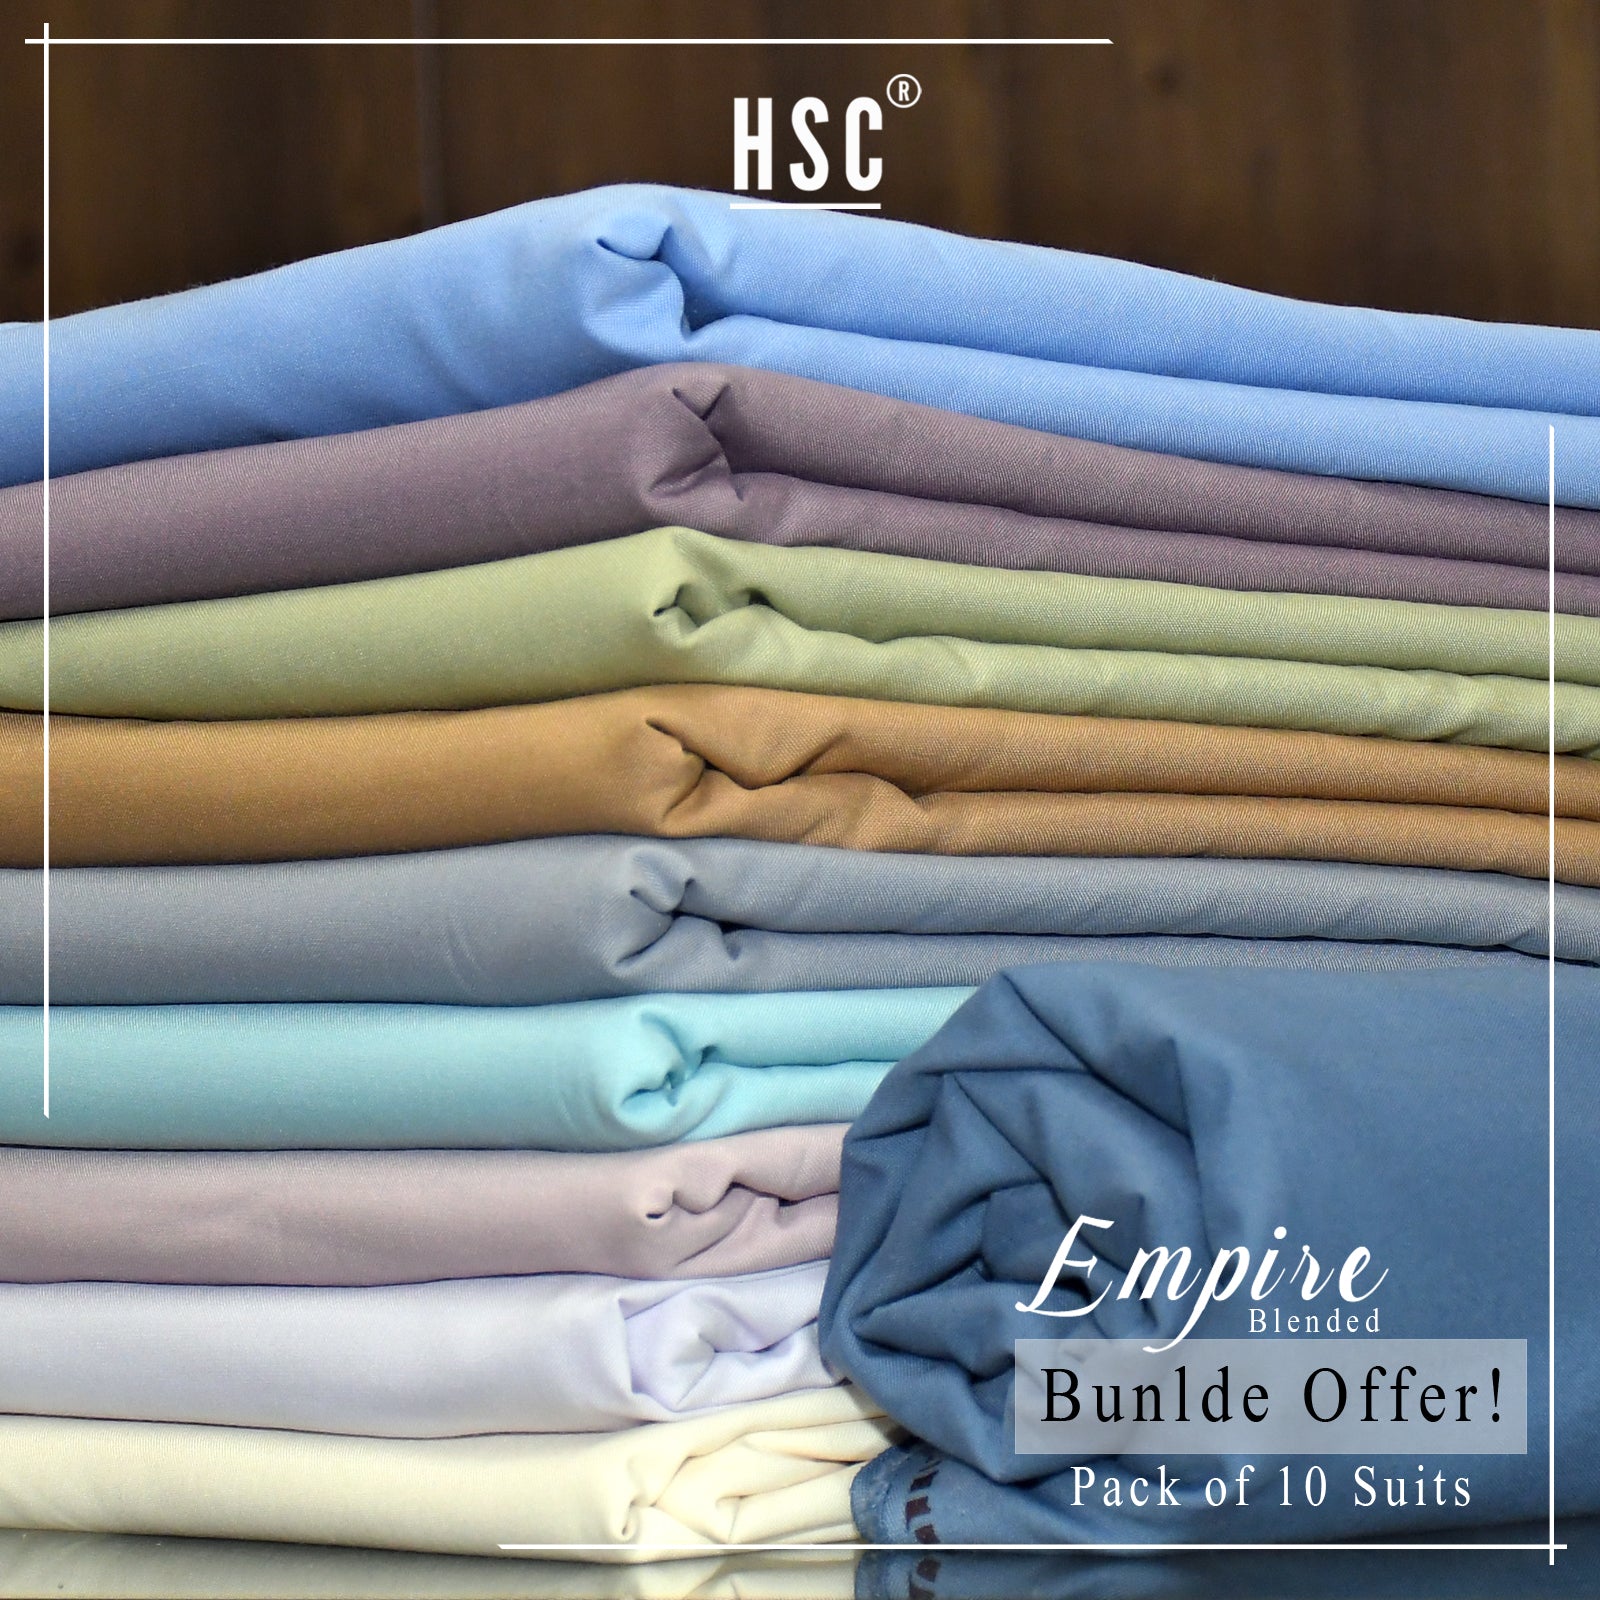 Empire Blended Wash&Wear Bundle Offer - Pack of 10 Suits